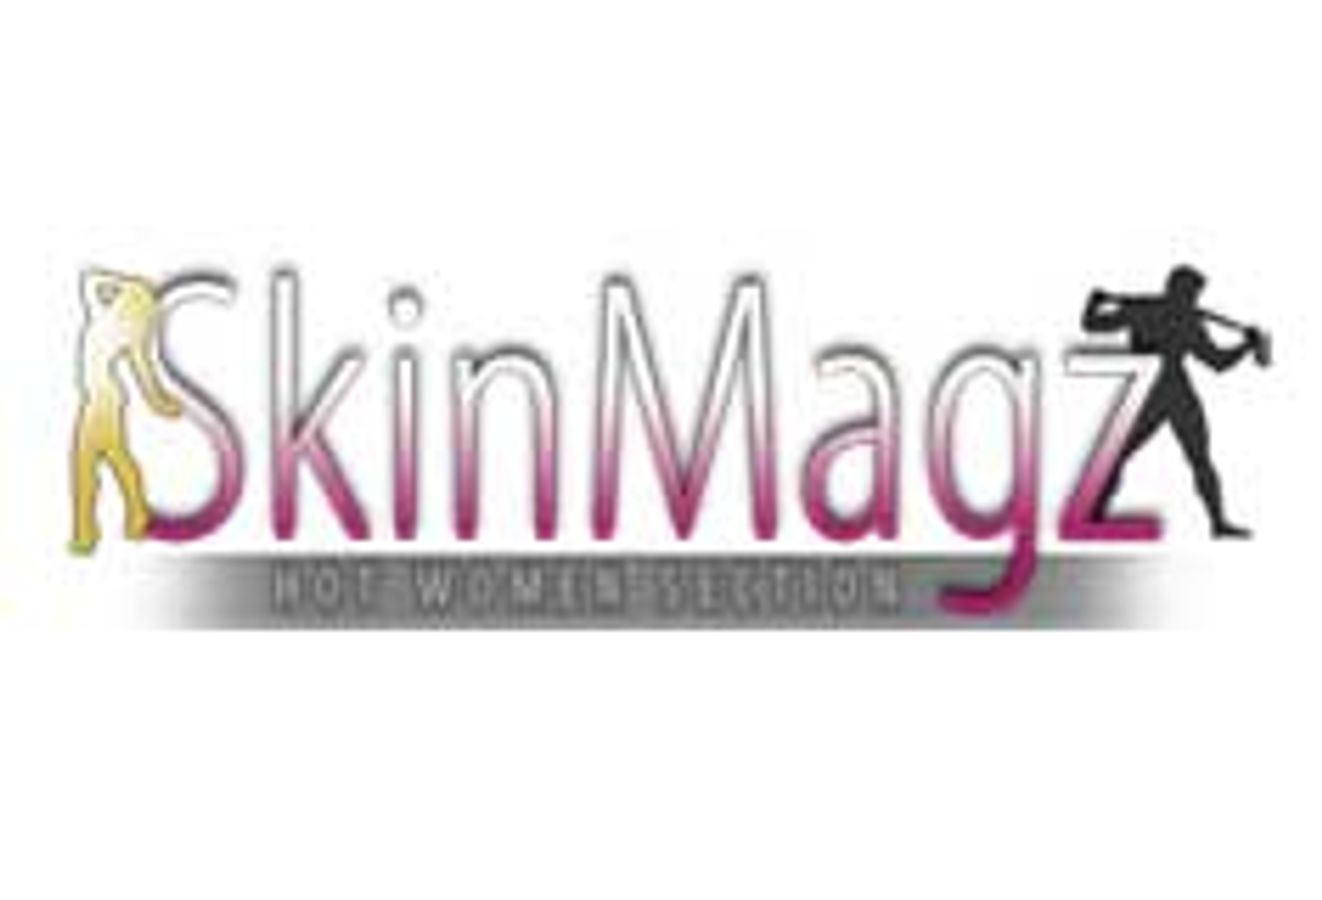 SkinMagz.com